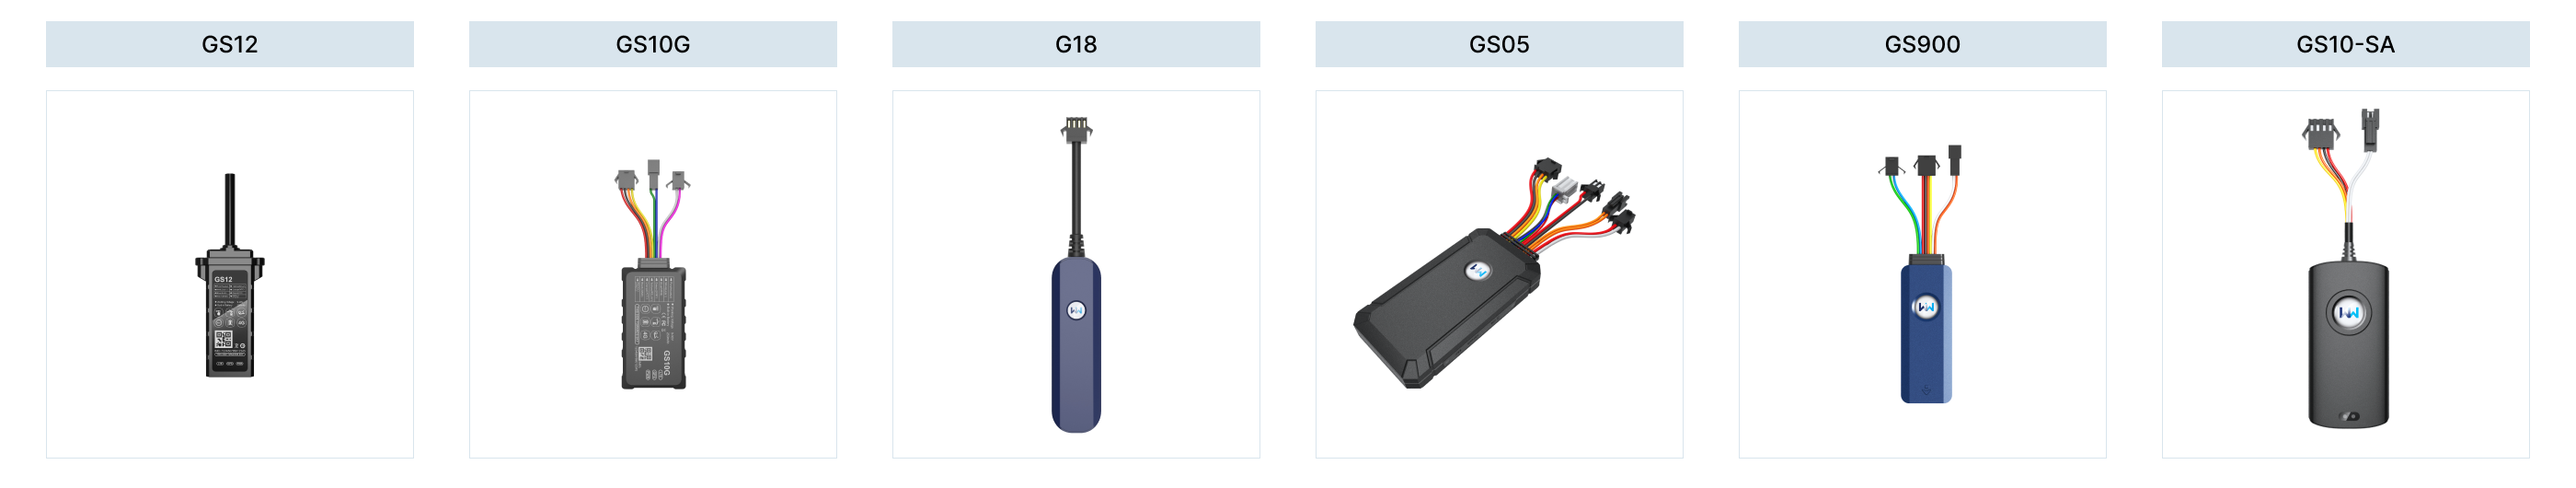 Wanway Devices on Gps Trace, Rastreador